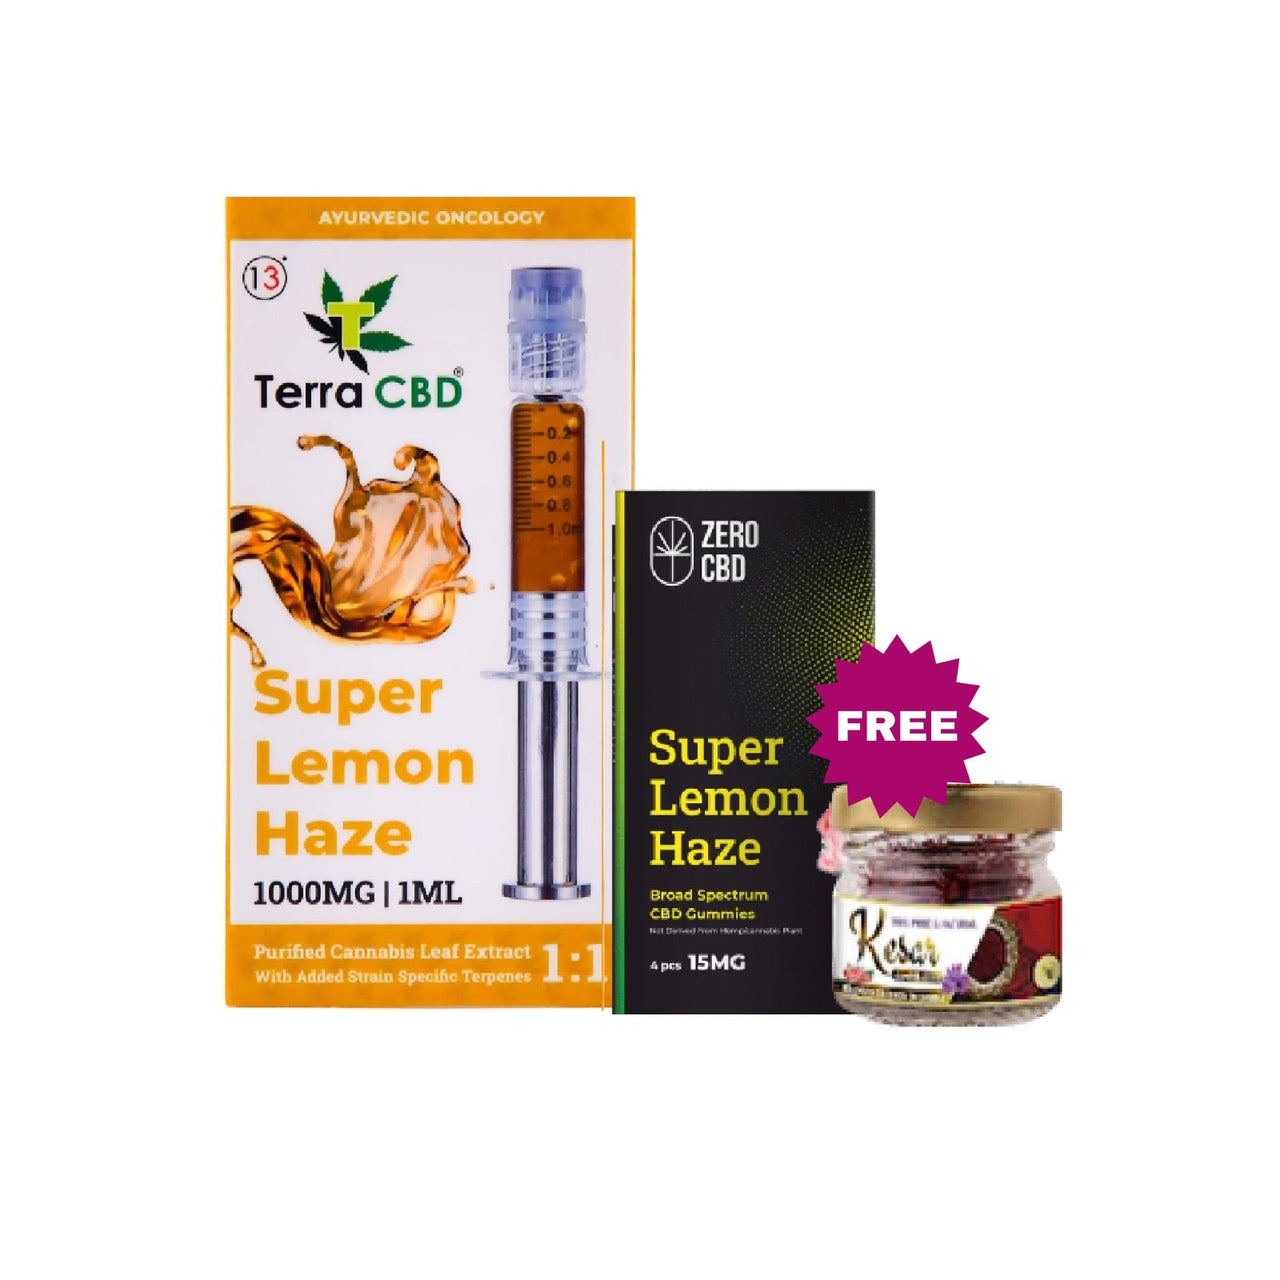 Special Offer - Free Kashmiri Saffron and Supar Lemon Haze CBD Gummies with Super Lemon Haze Cannabis Extract - CBD Store India